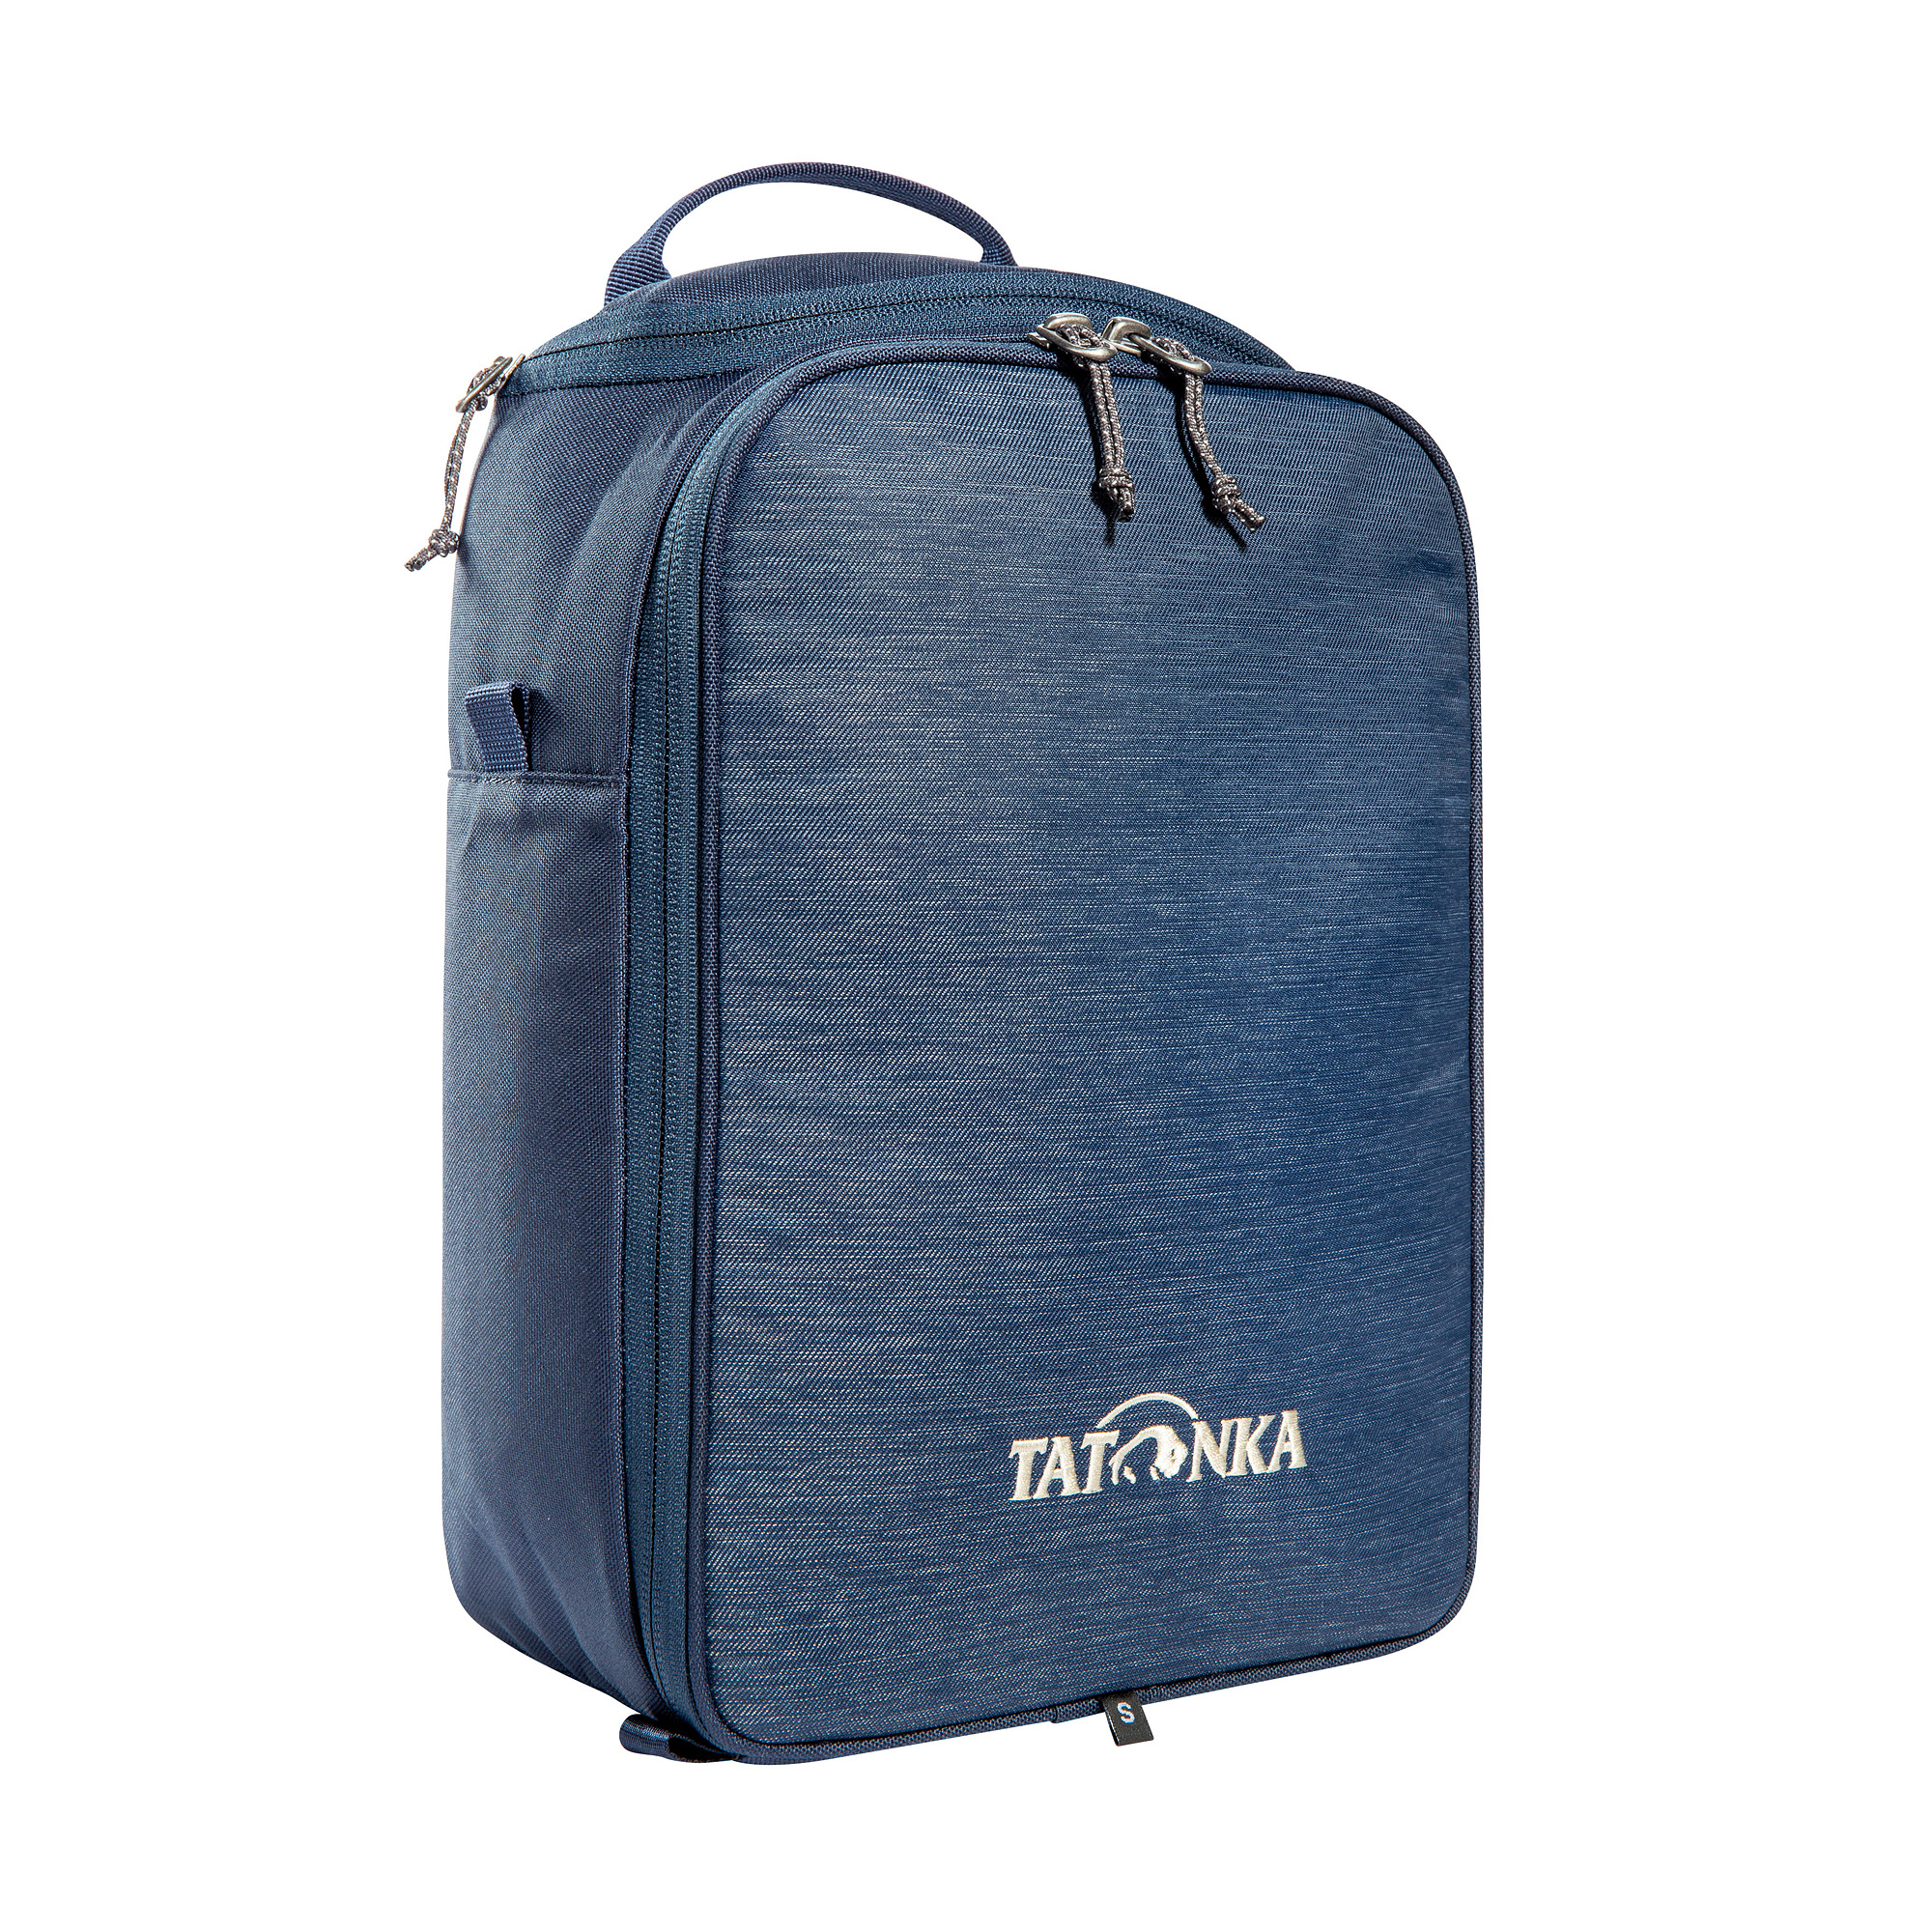 Tatonka Cooler Bag S navy blau Sonstige Taschen 4013236384536